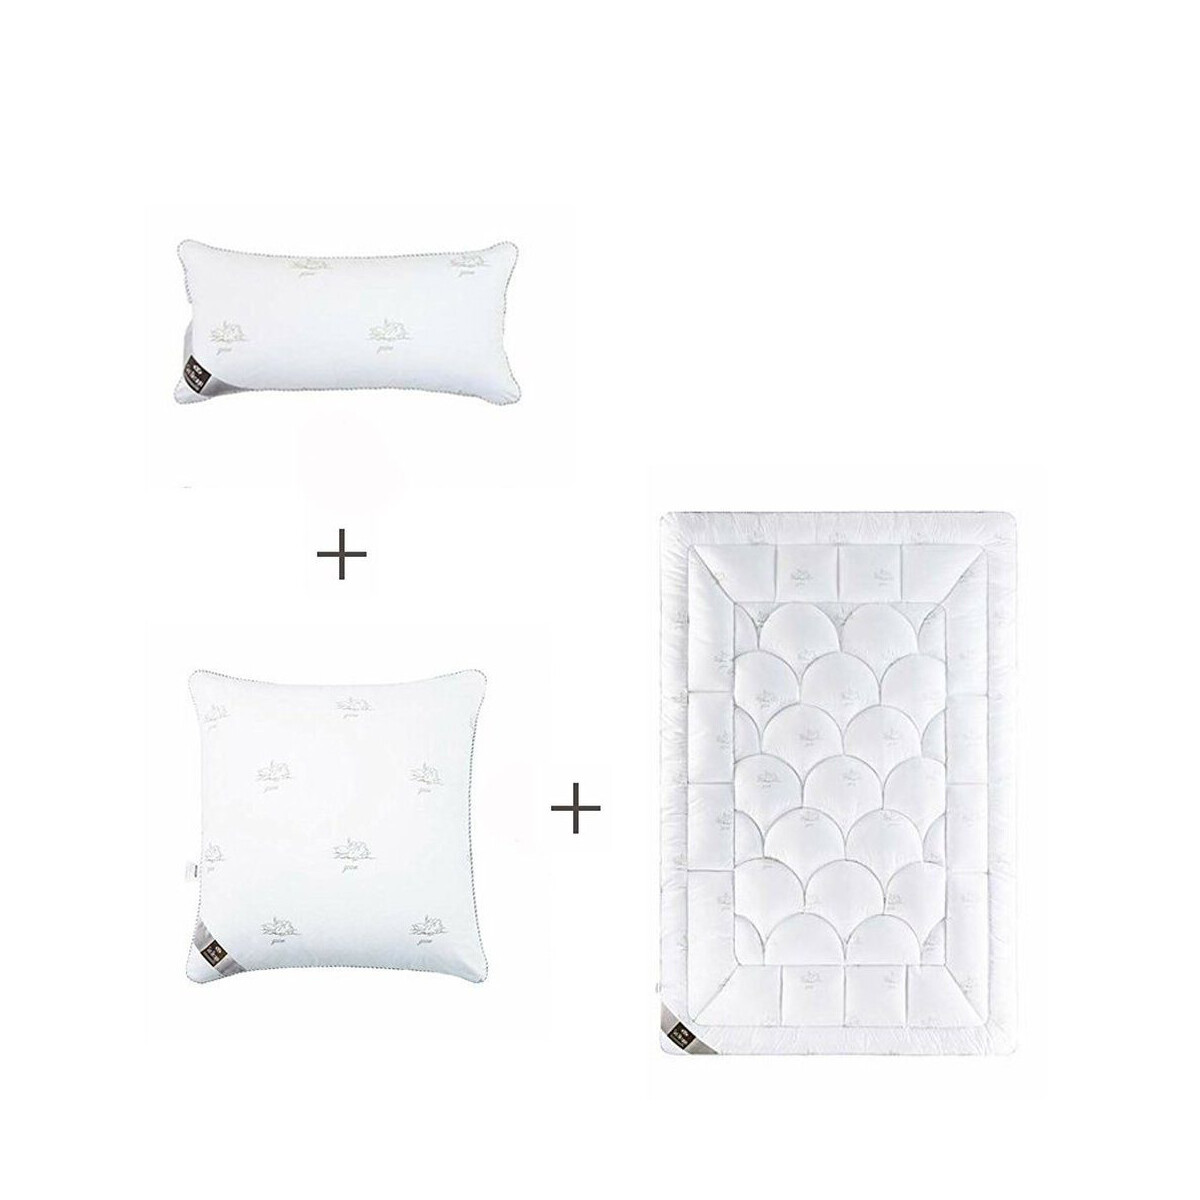 Hochwertige Bettdecken günstig bestellen - Sei € 104,90 Design